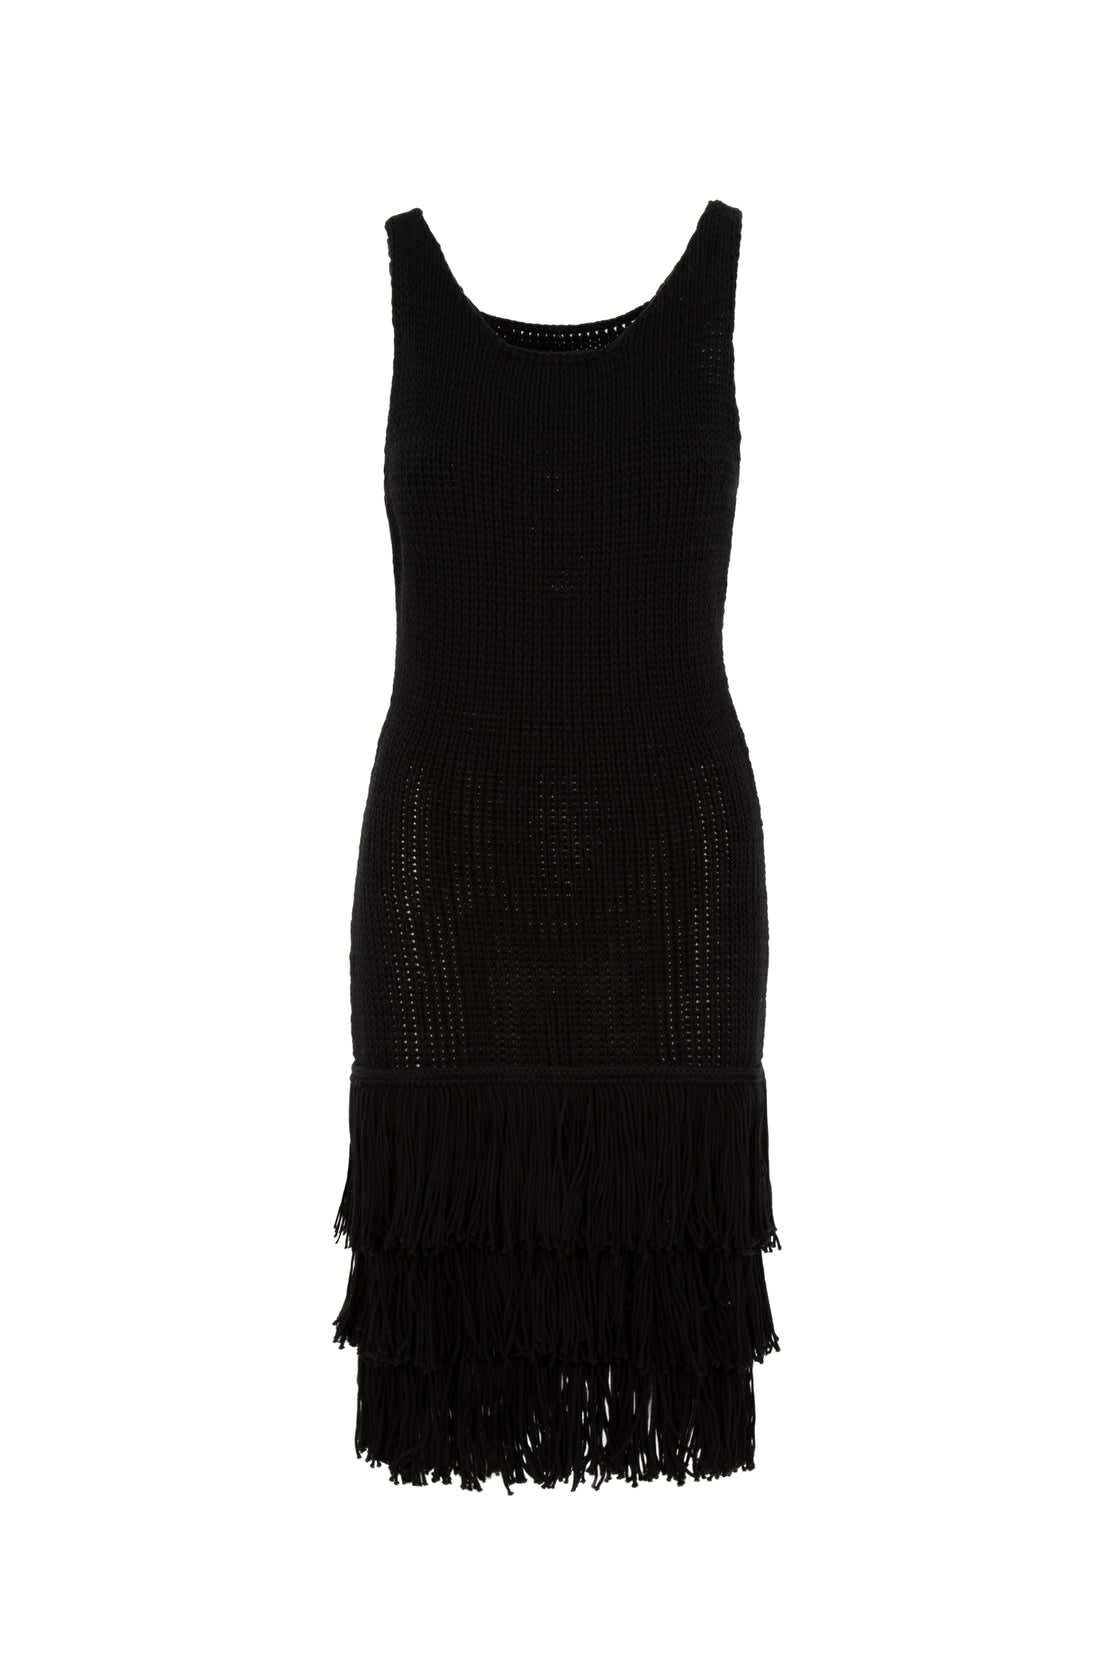 Amotea Mila Dress Short In Black Knit